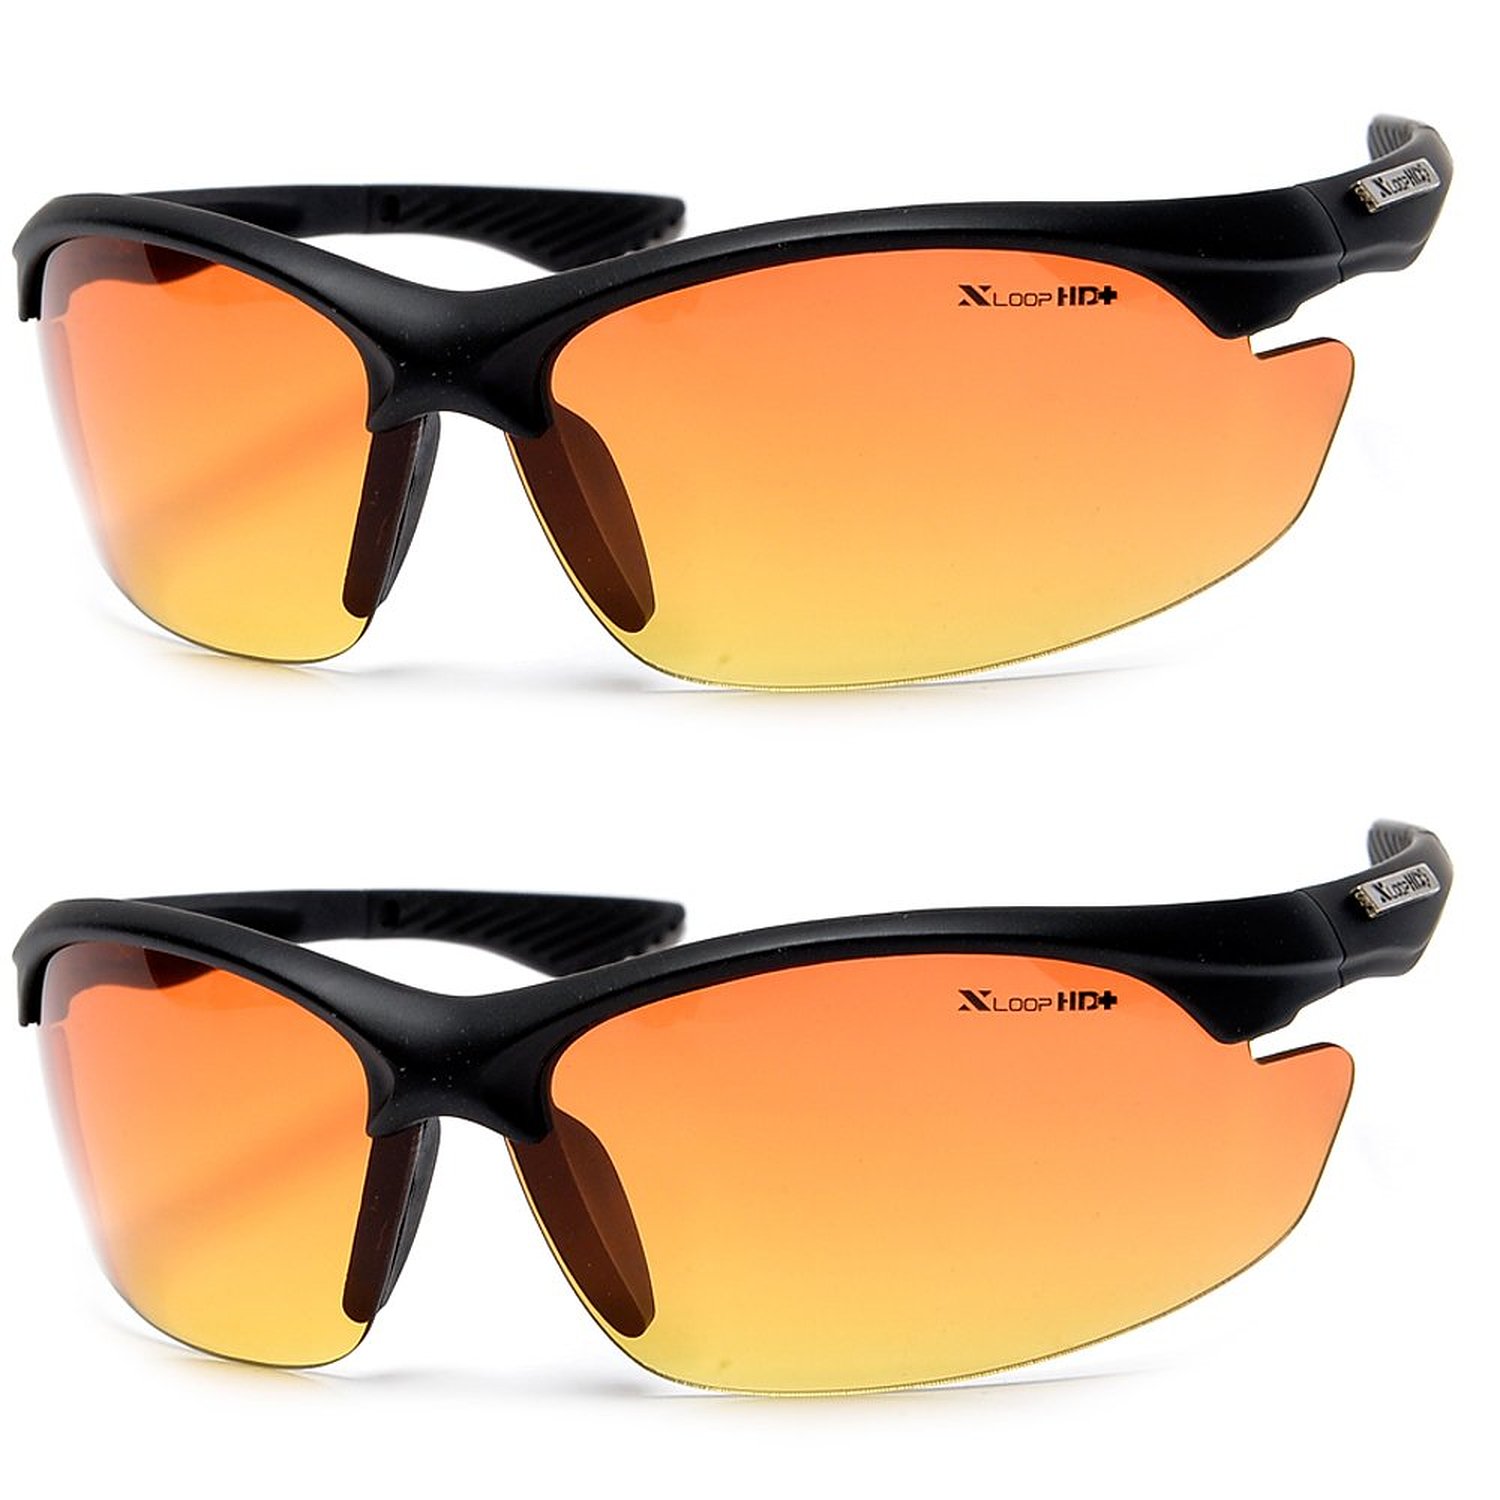 Xloop HD Vision Anti Glare Driving Sunglasses - Semi Rimless